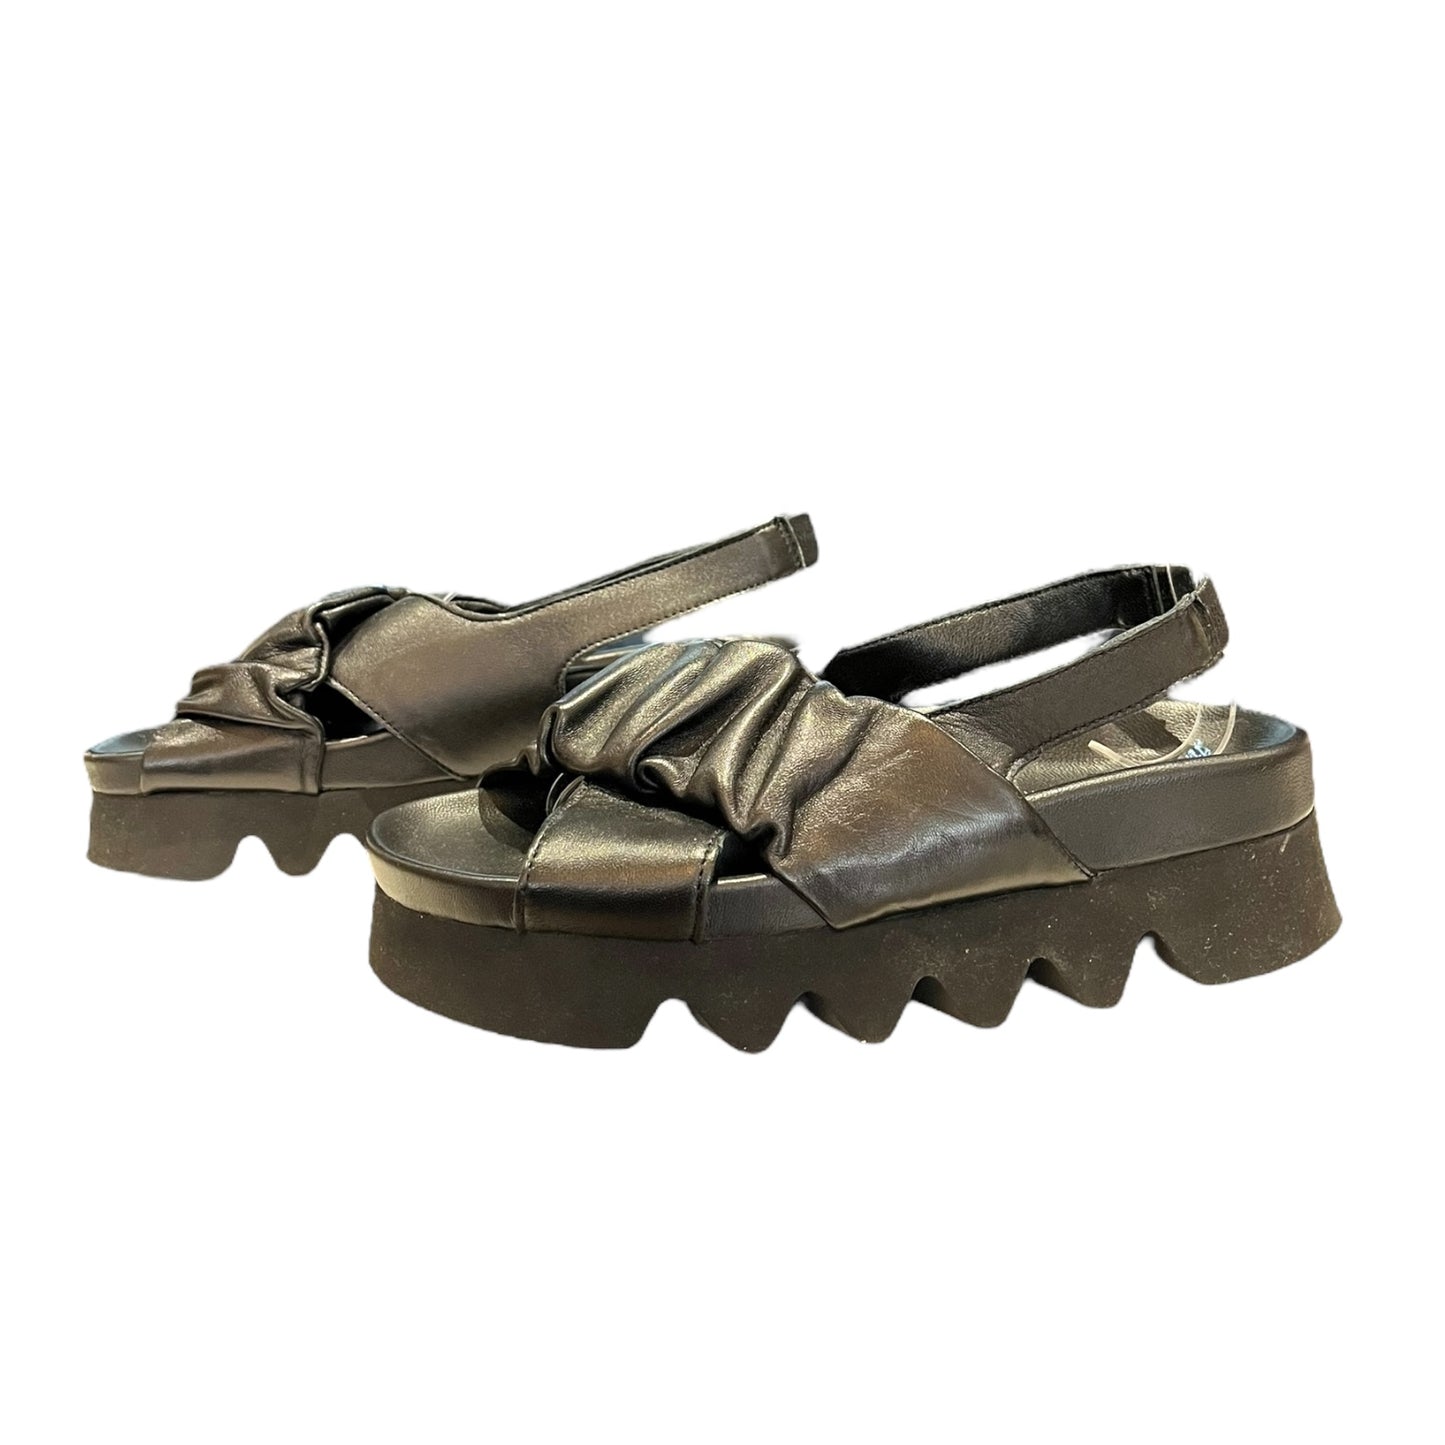 Patrizia Bonfanti Black Leather Sandals - 5 - NEW